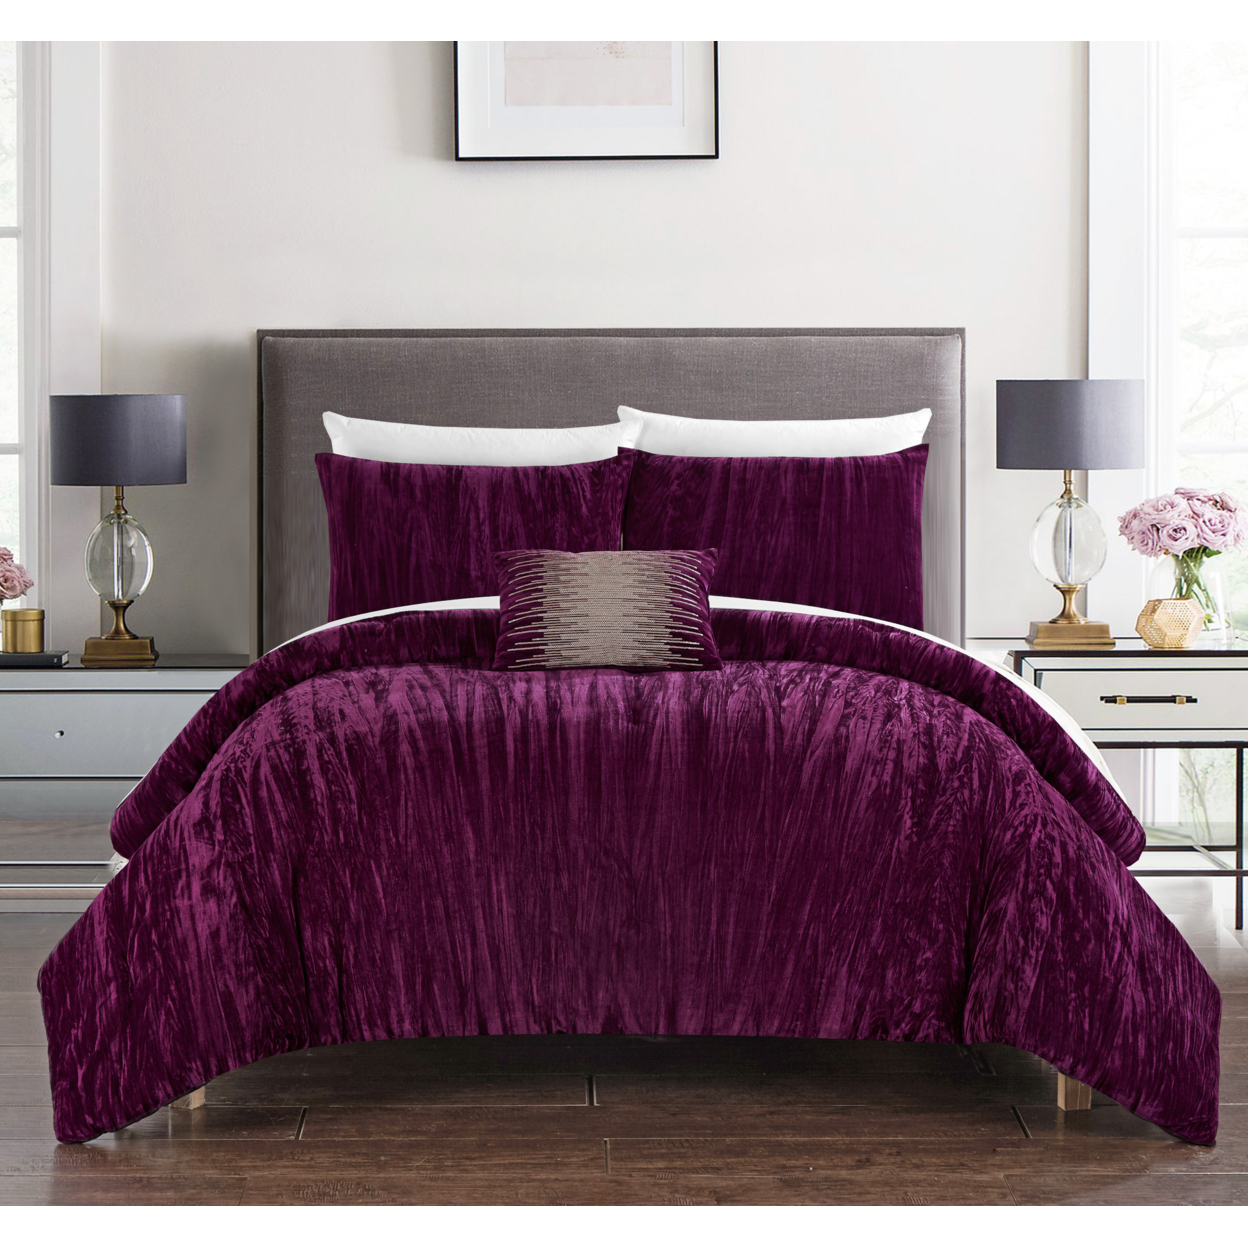 Merieta 4 Piece Comforter Set Crinkle Crushed Velvet Bedding - Decorative Pillow Shams Included - Plum, Queen